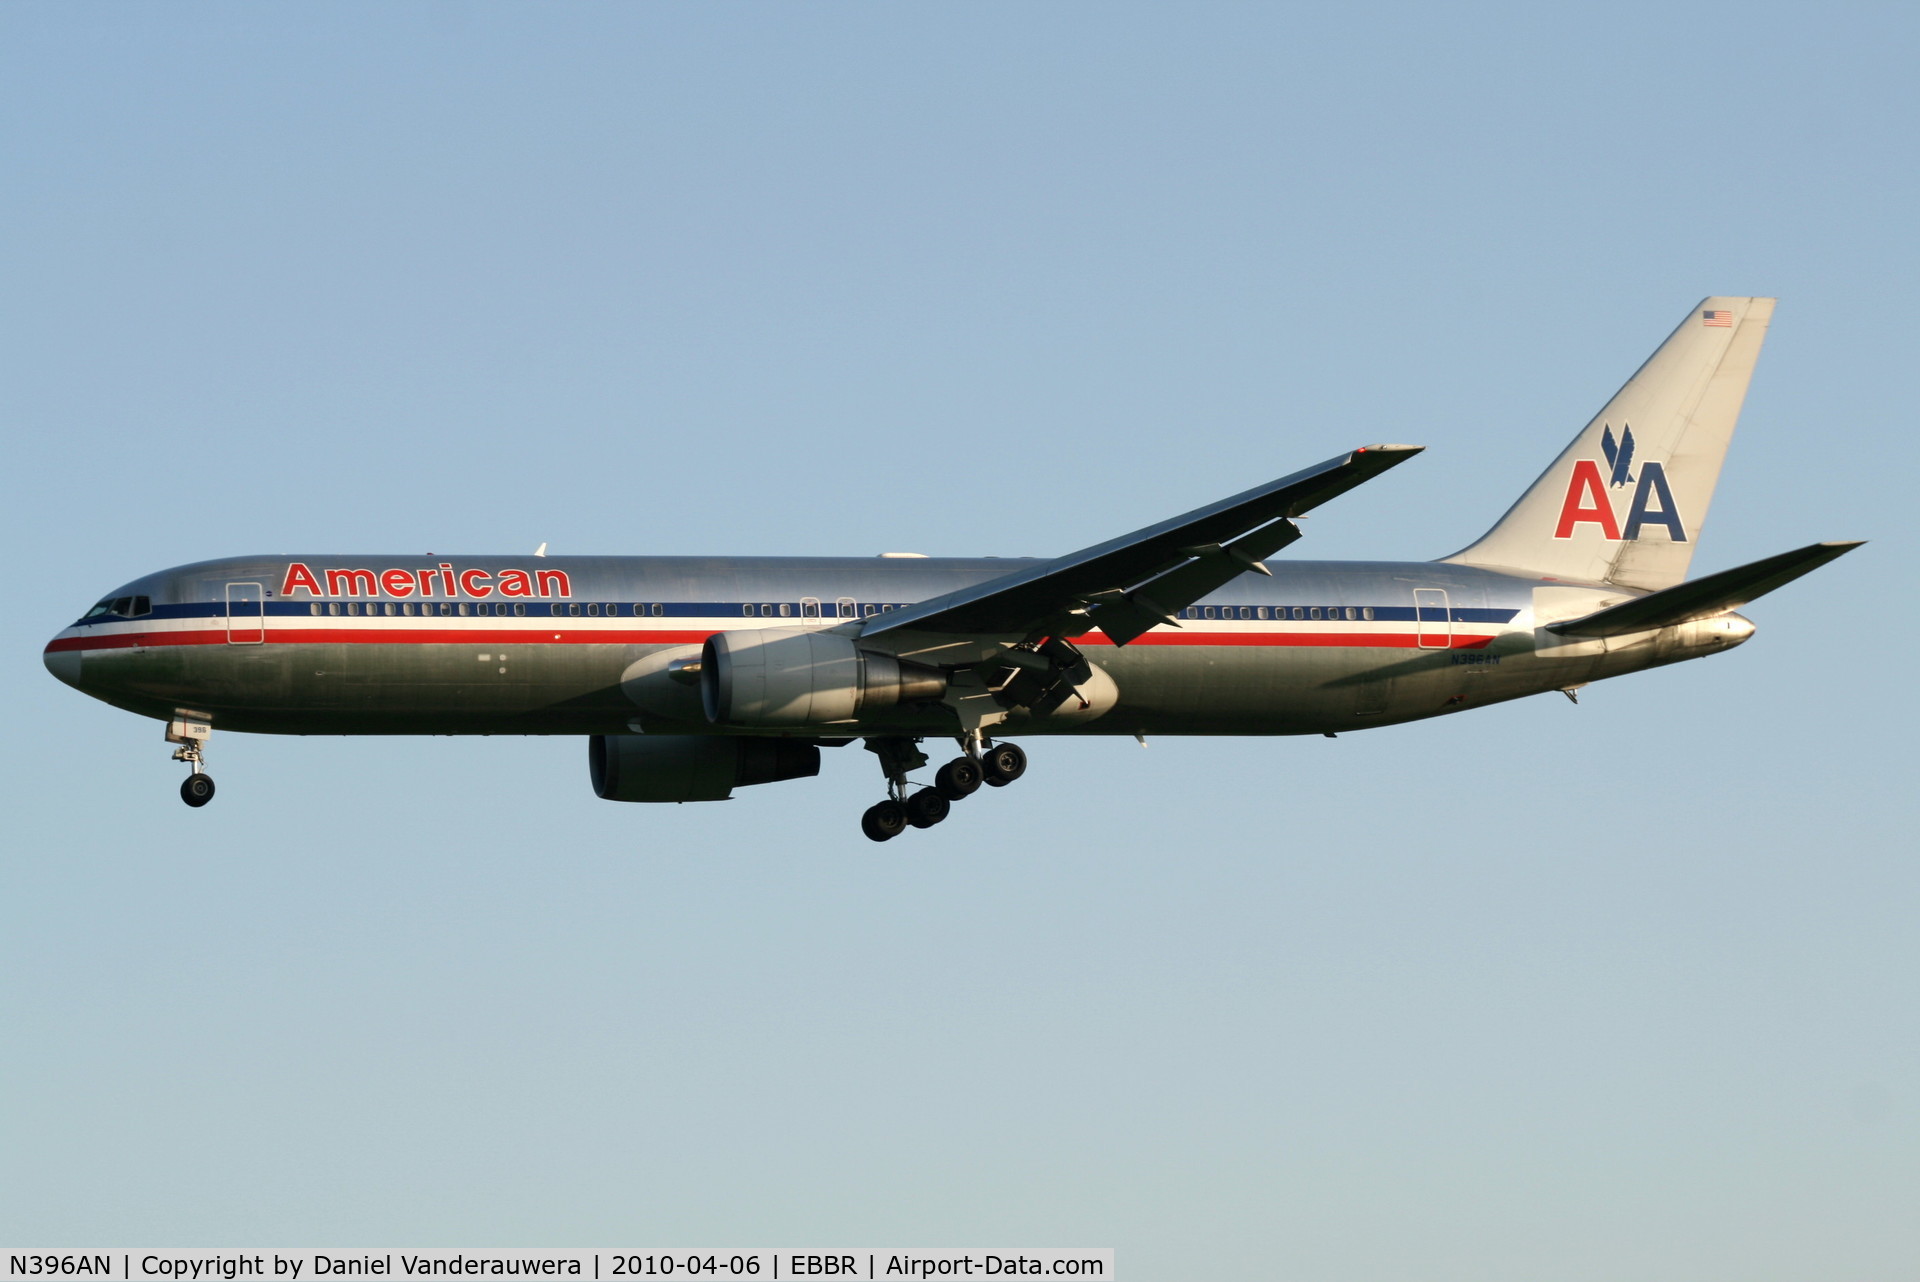 N396AN, 1999 Boeing 767-323/ER C/N 29603, Arrival of flight AA088 to RWY 25L